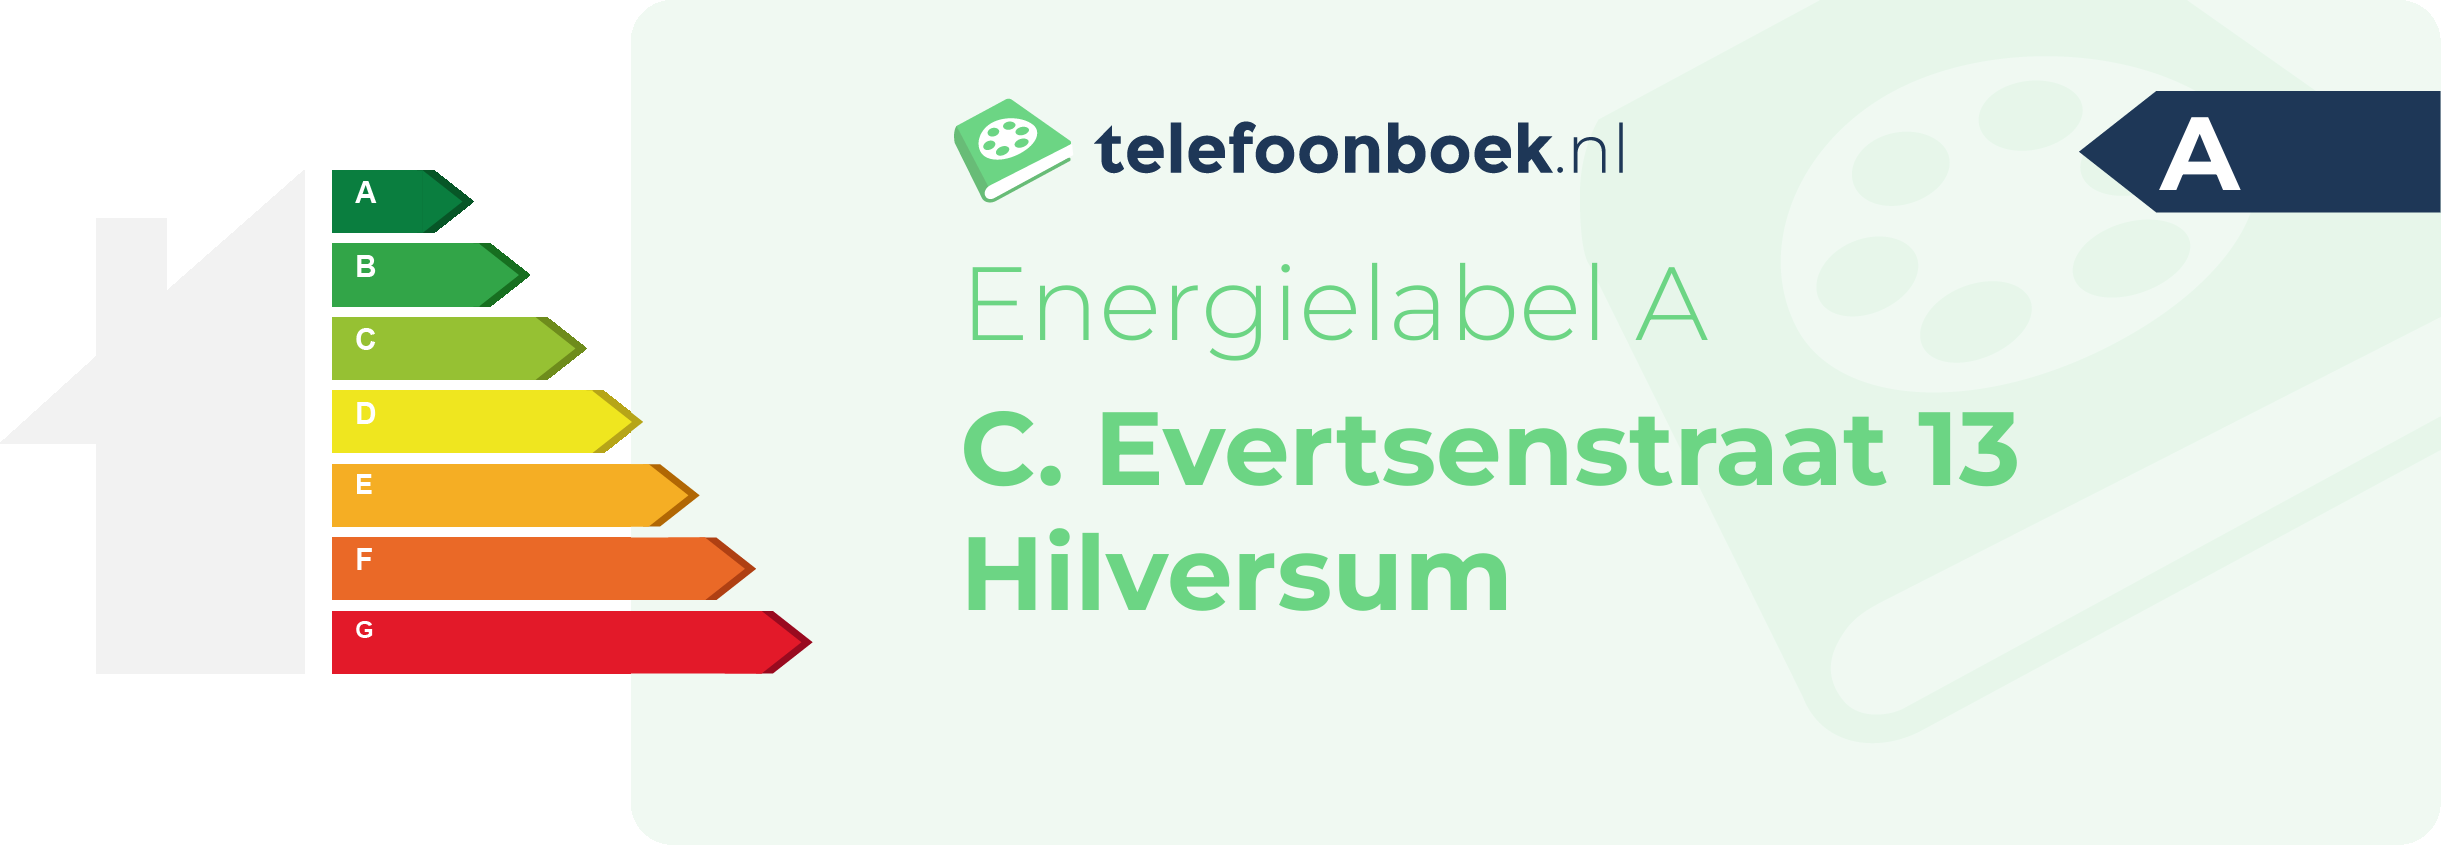 Energielabel C. Evertsenstraat 13 Hilversum